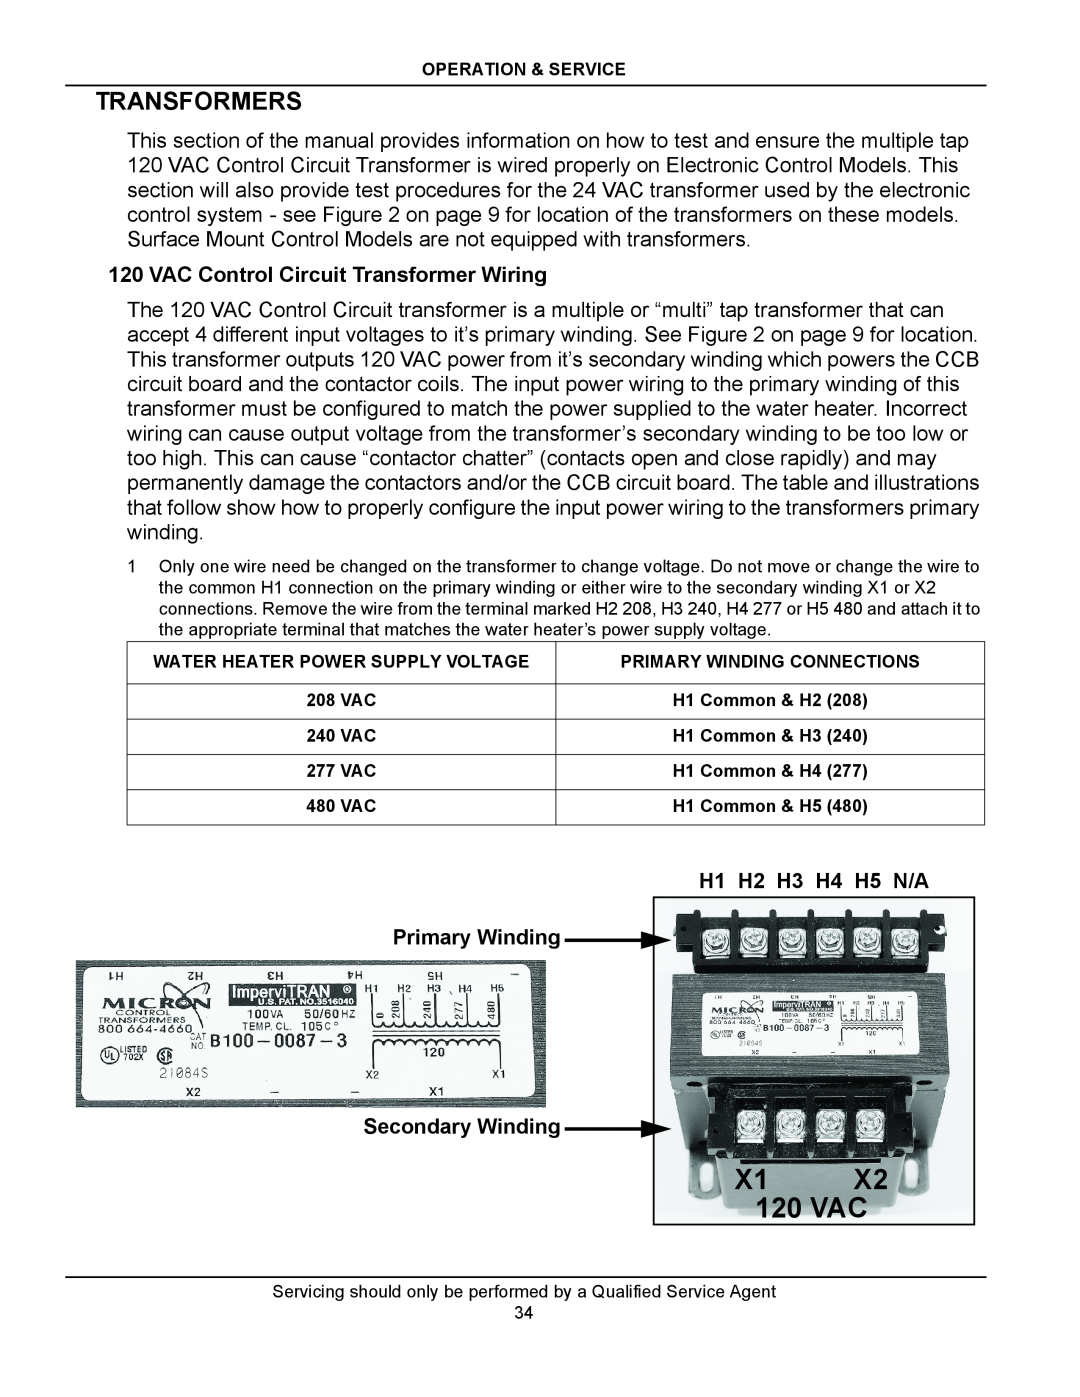 American Water Heater STCE3-52/80/119, ITCE3-52/80/119 X1 120 VAC, Transformers, VAC Control Circuit Transformer Wiring 